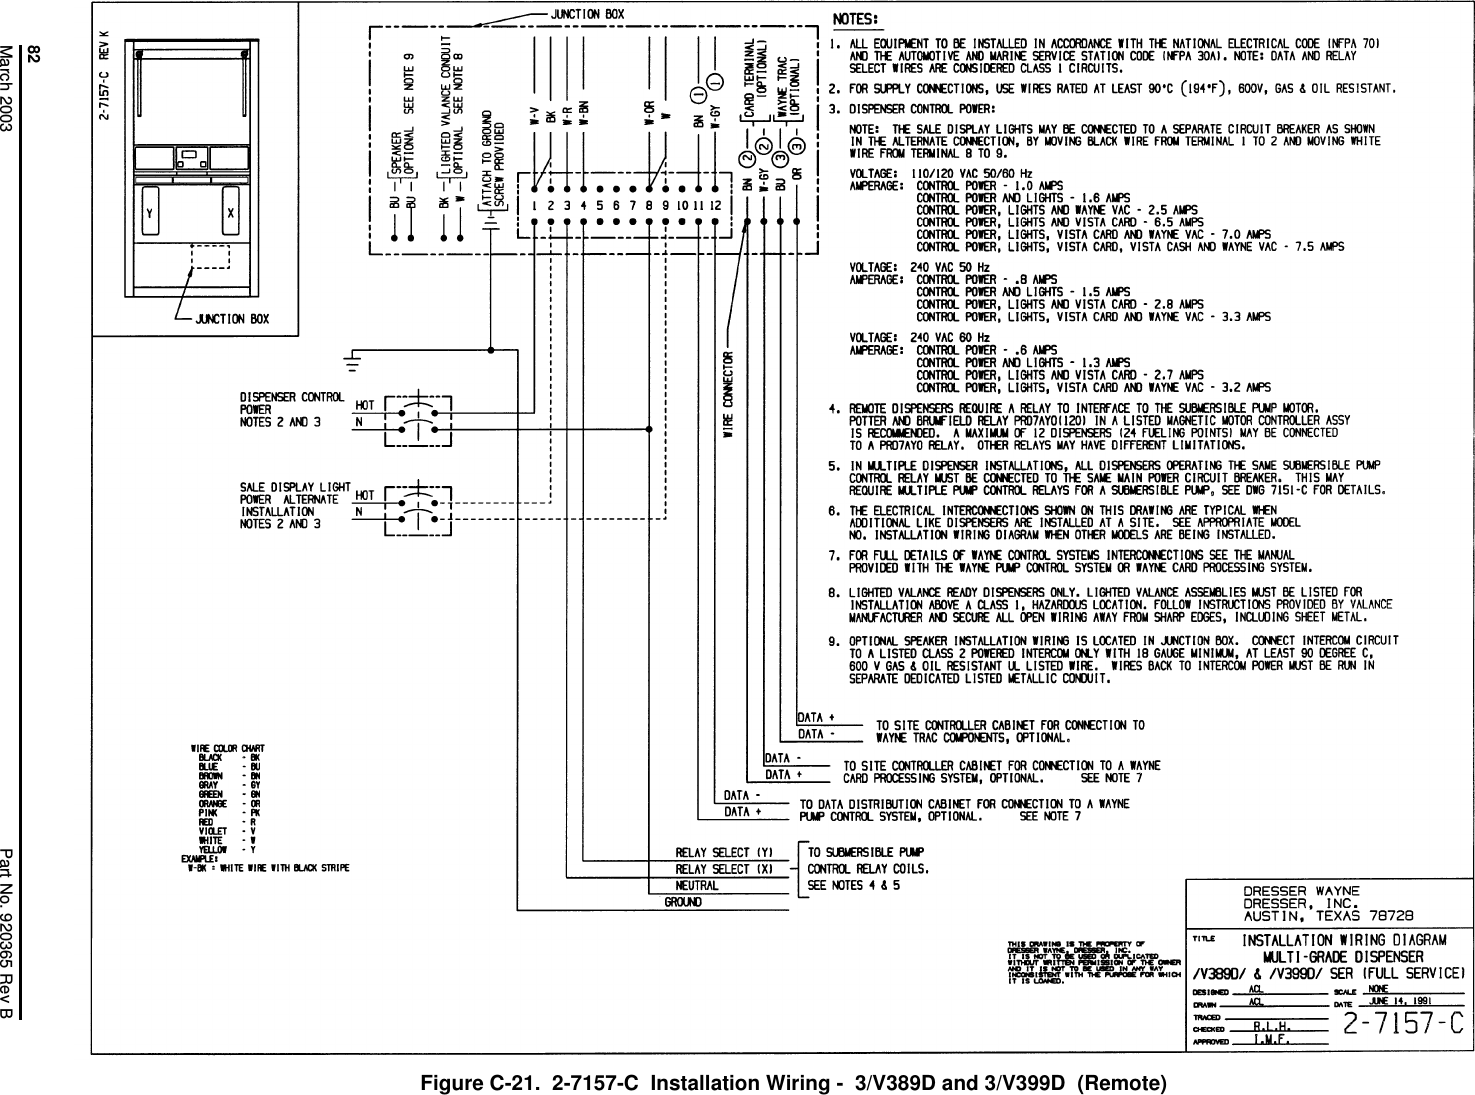 82March 2003 Part No. 920365 Rev BFigure C-21.  2-7157-C  Installation Wiring -  3/V389D and 3/V399D  (Remote)